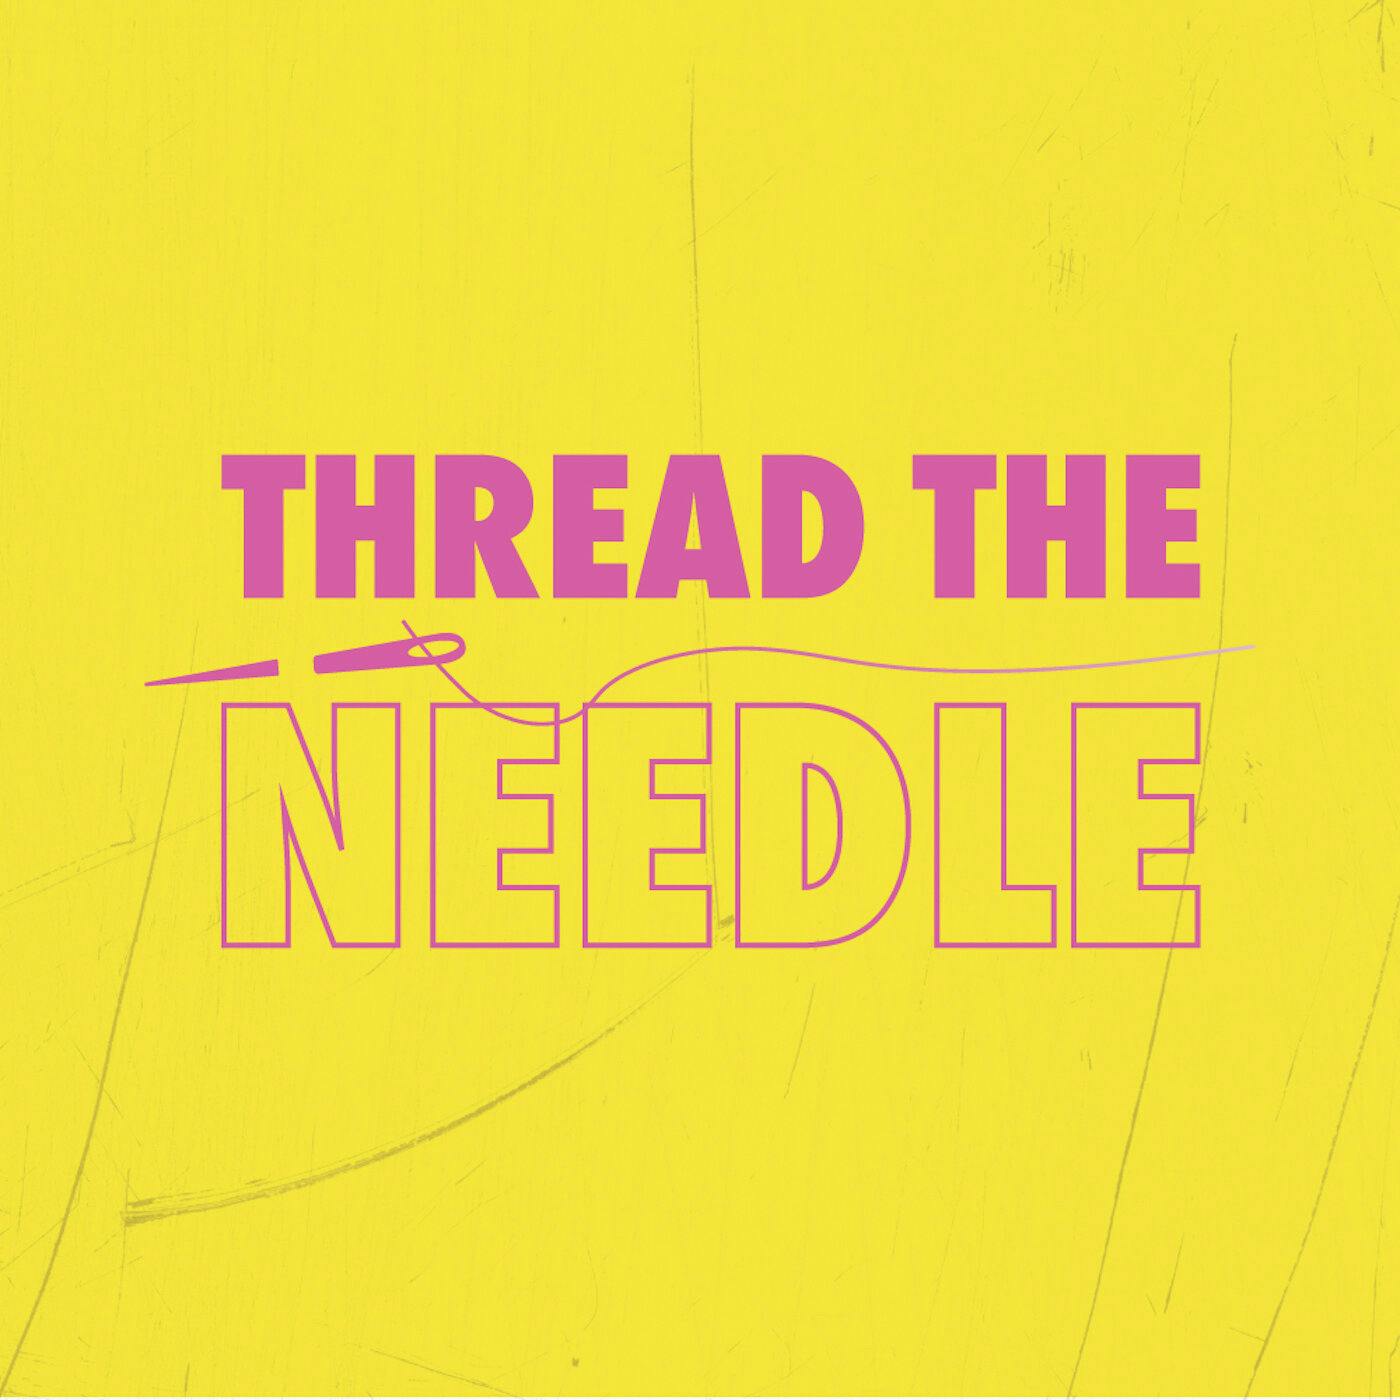 Thread the Needle